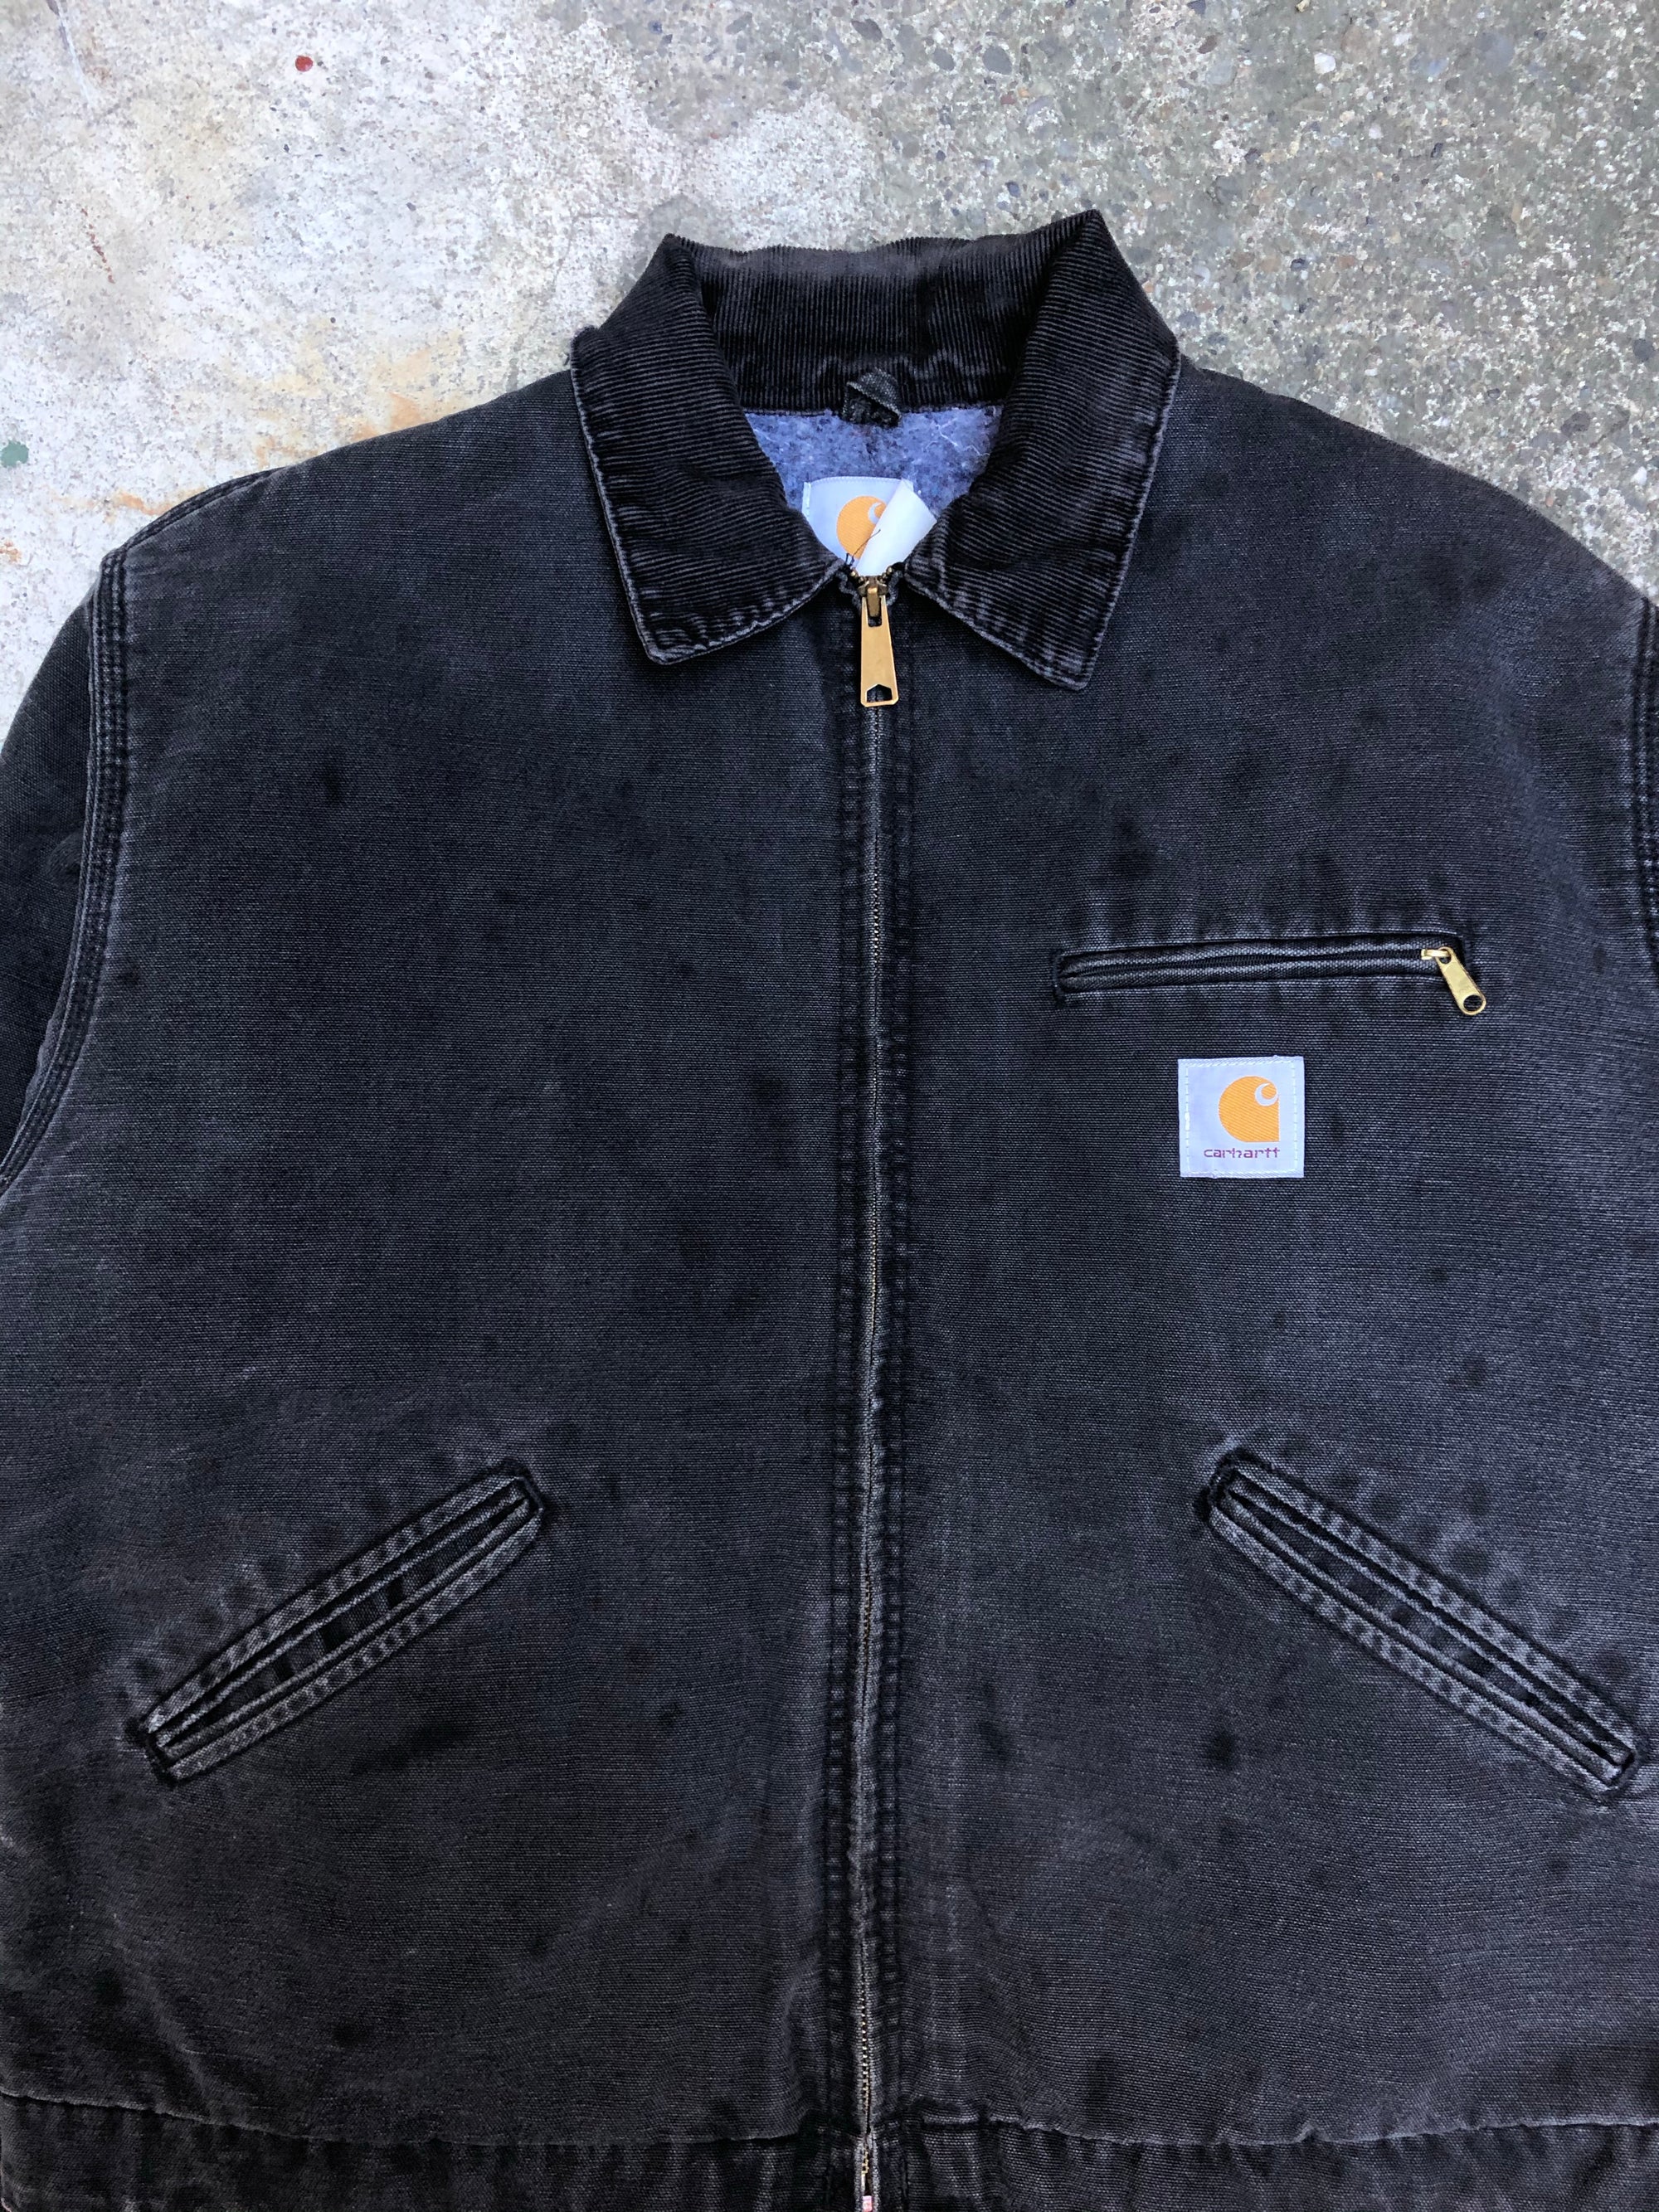 1990s Carhartt Faded Black Lined Work Jacket